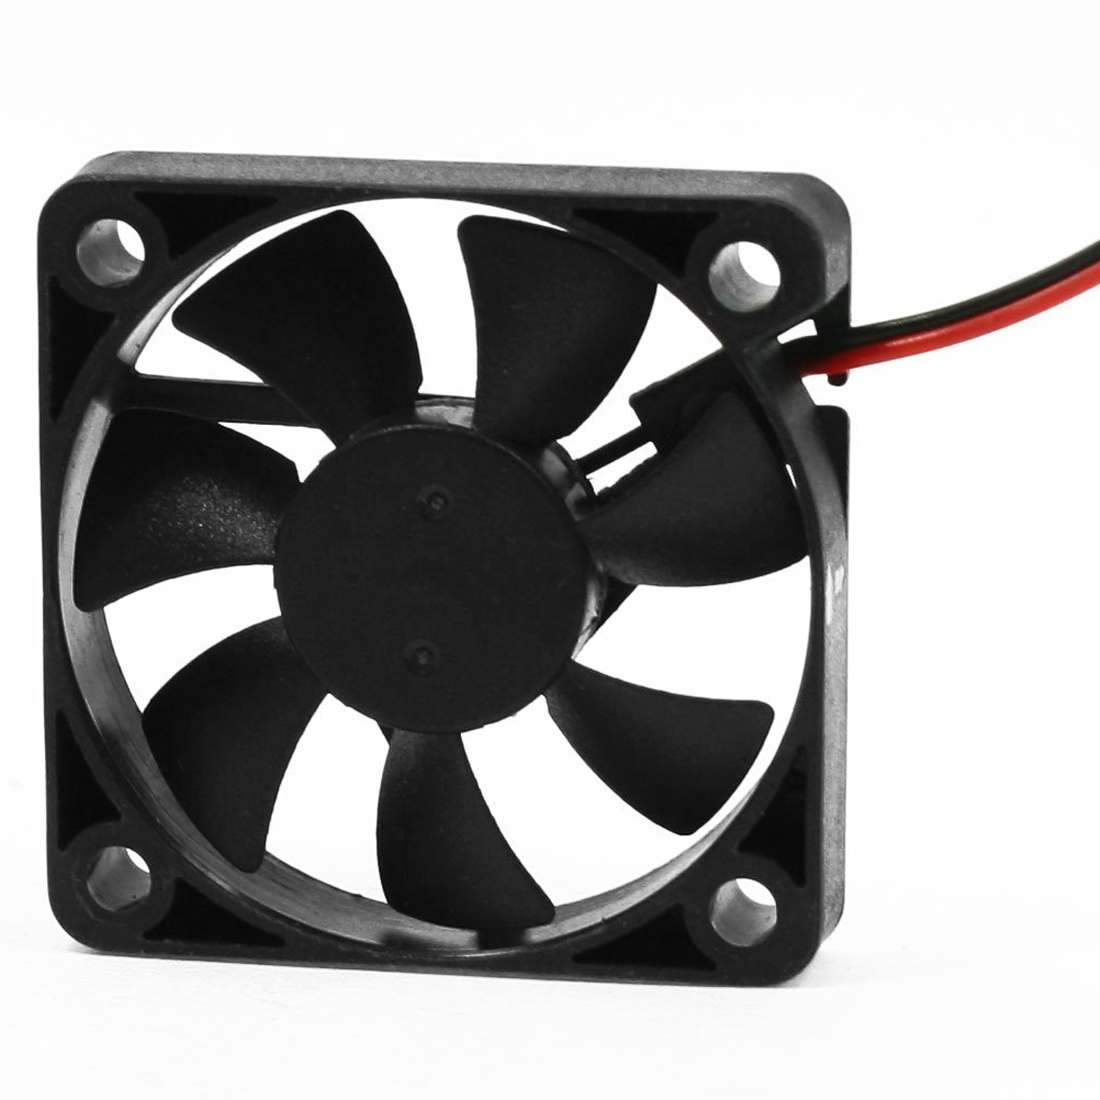 1Pc 12V DC 50mm Blow Radial Cooling Fan Hotend Extruder For RepRap 3D Printer Z17 Drop ship